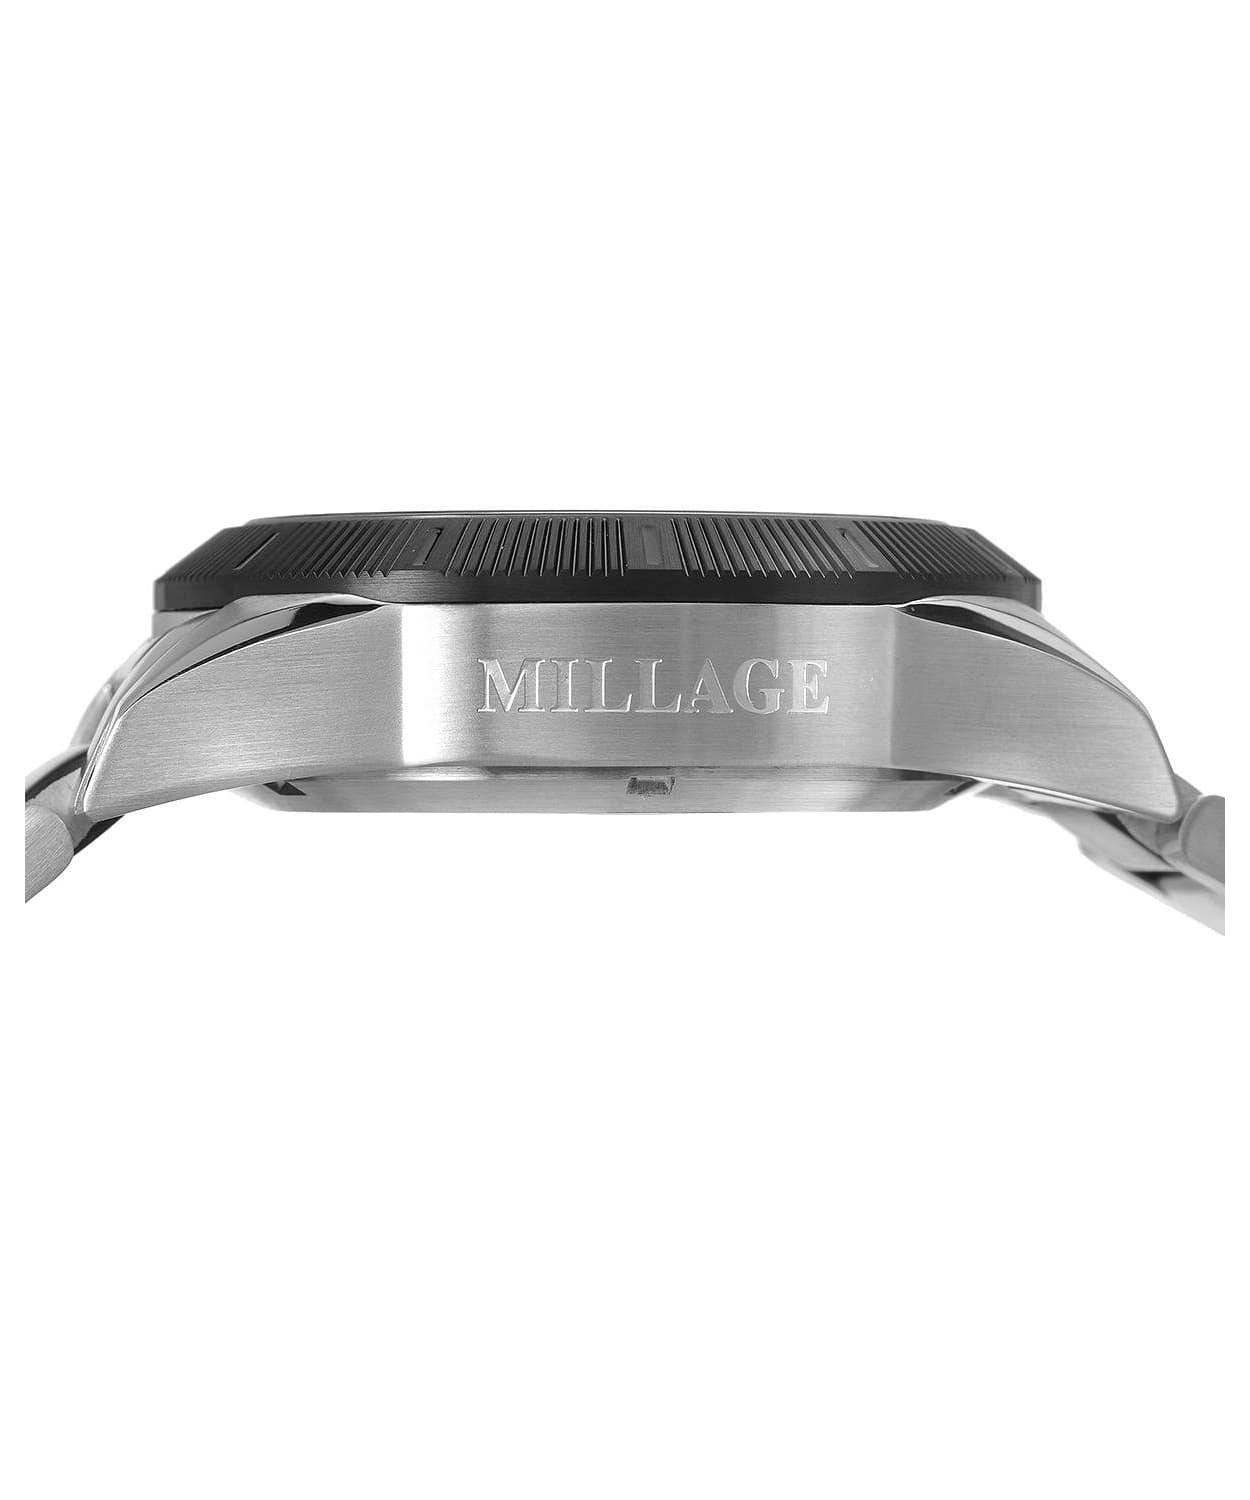 Millage Esquire Collection Model M3426 Watch - Swiss Quartz Movement View 3